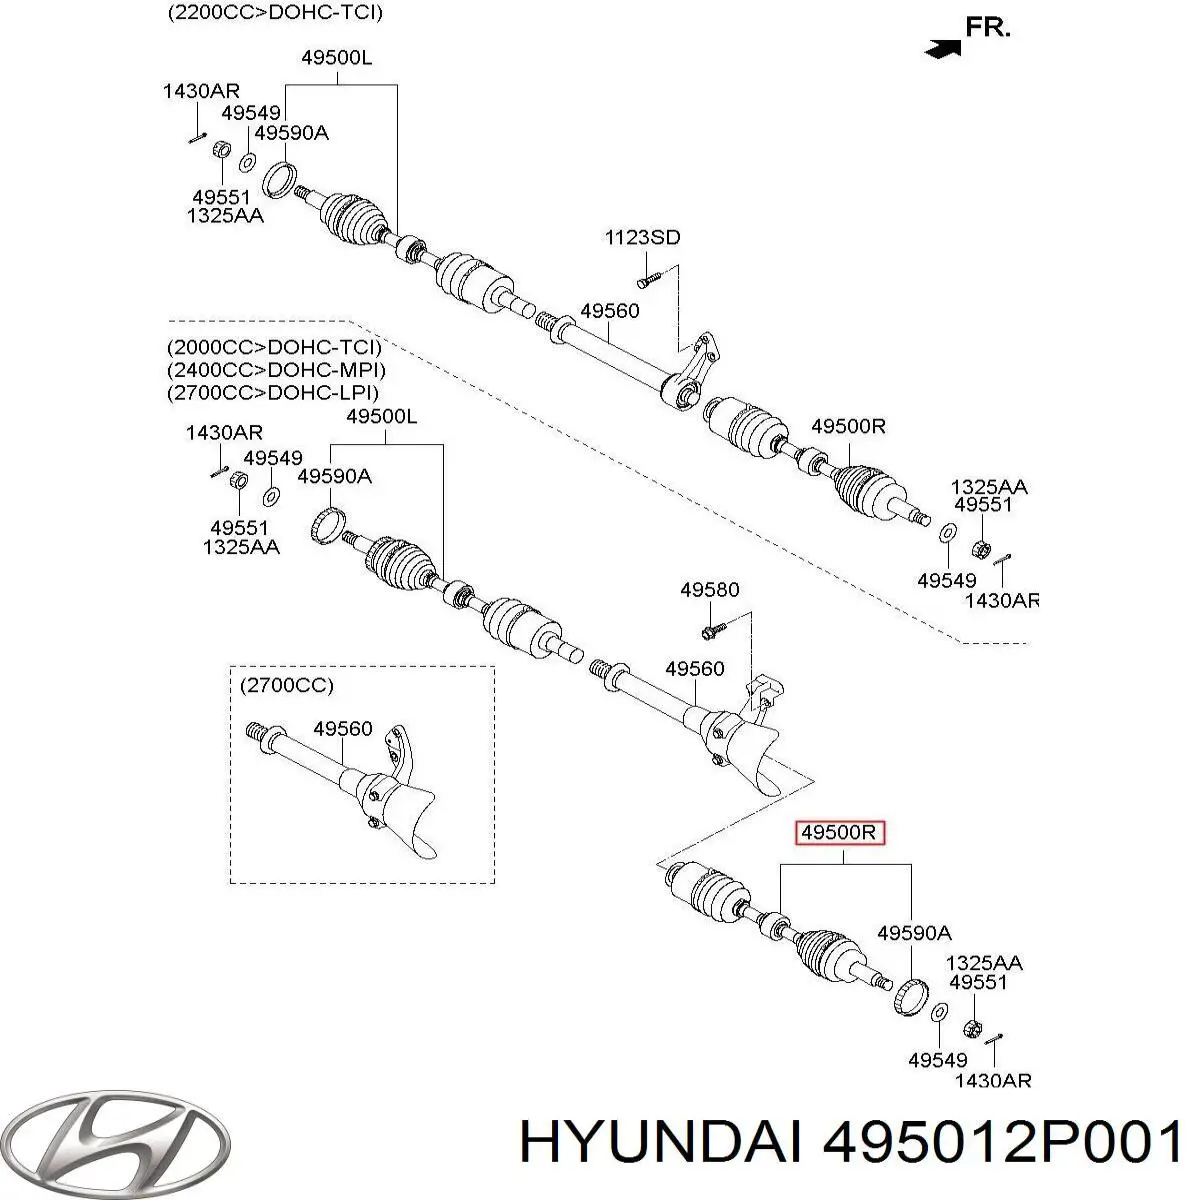 495012P001 Hyundai/Kia árbol de transmisión delantero derecho